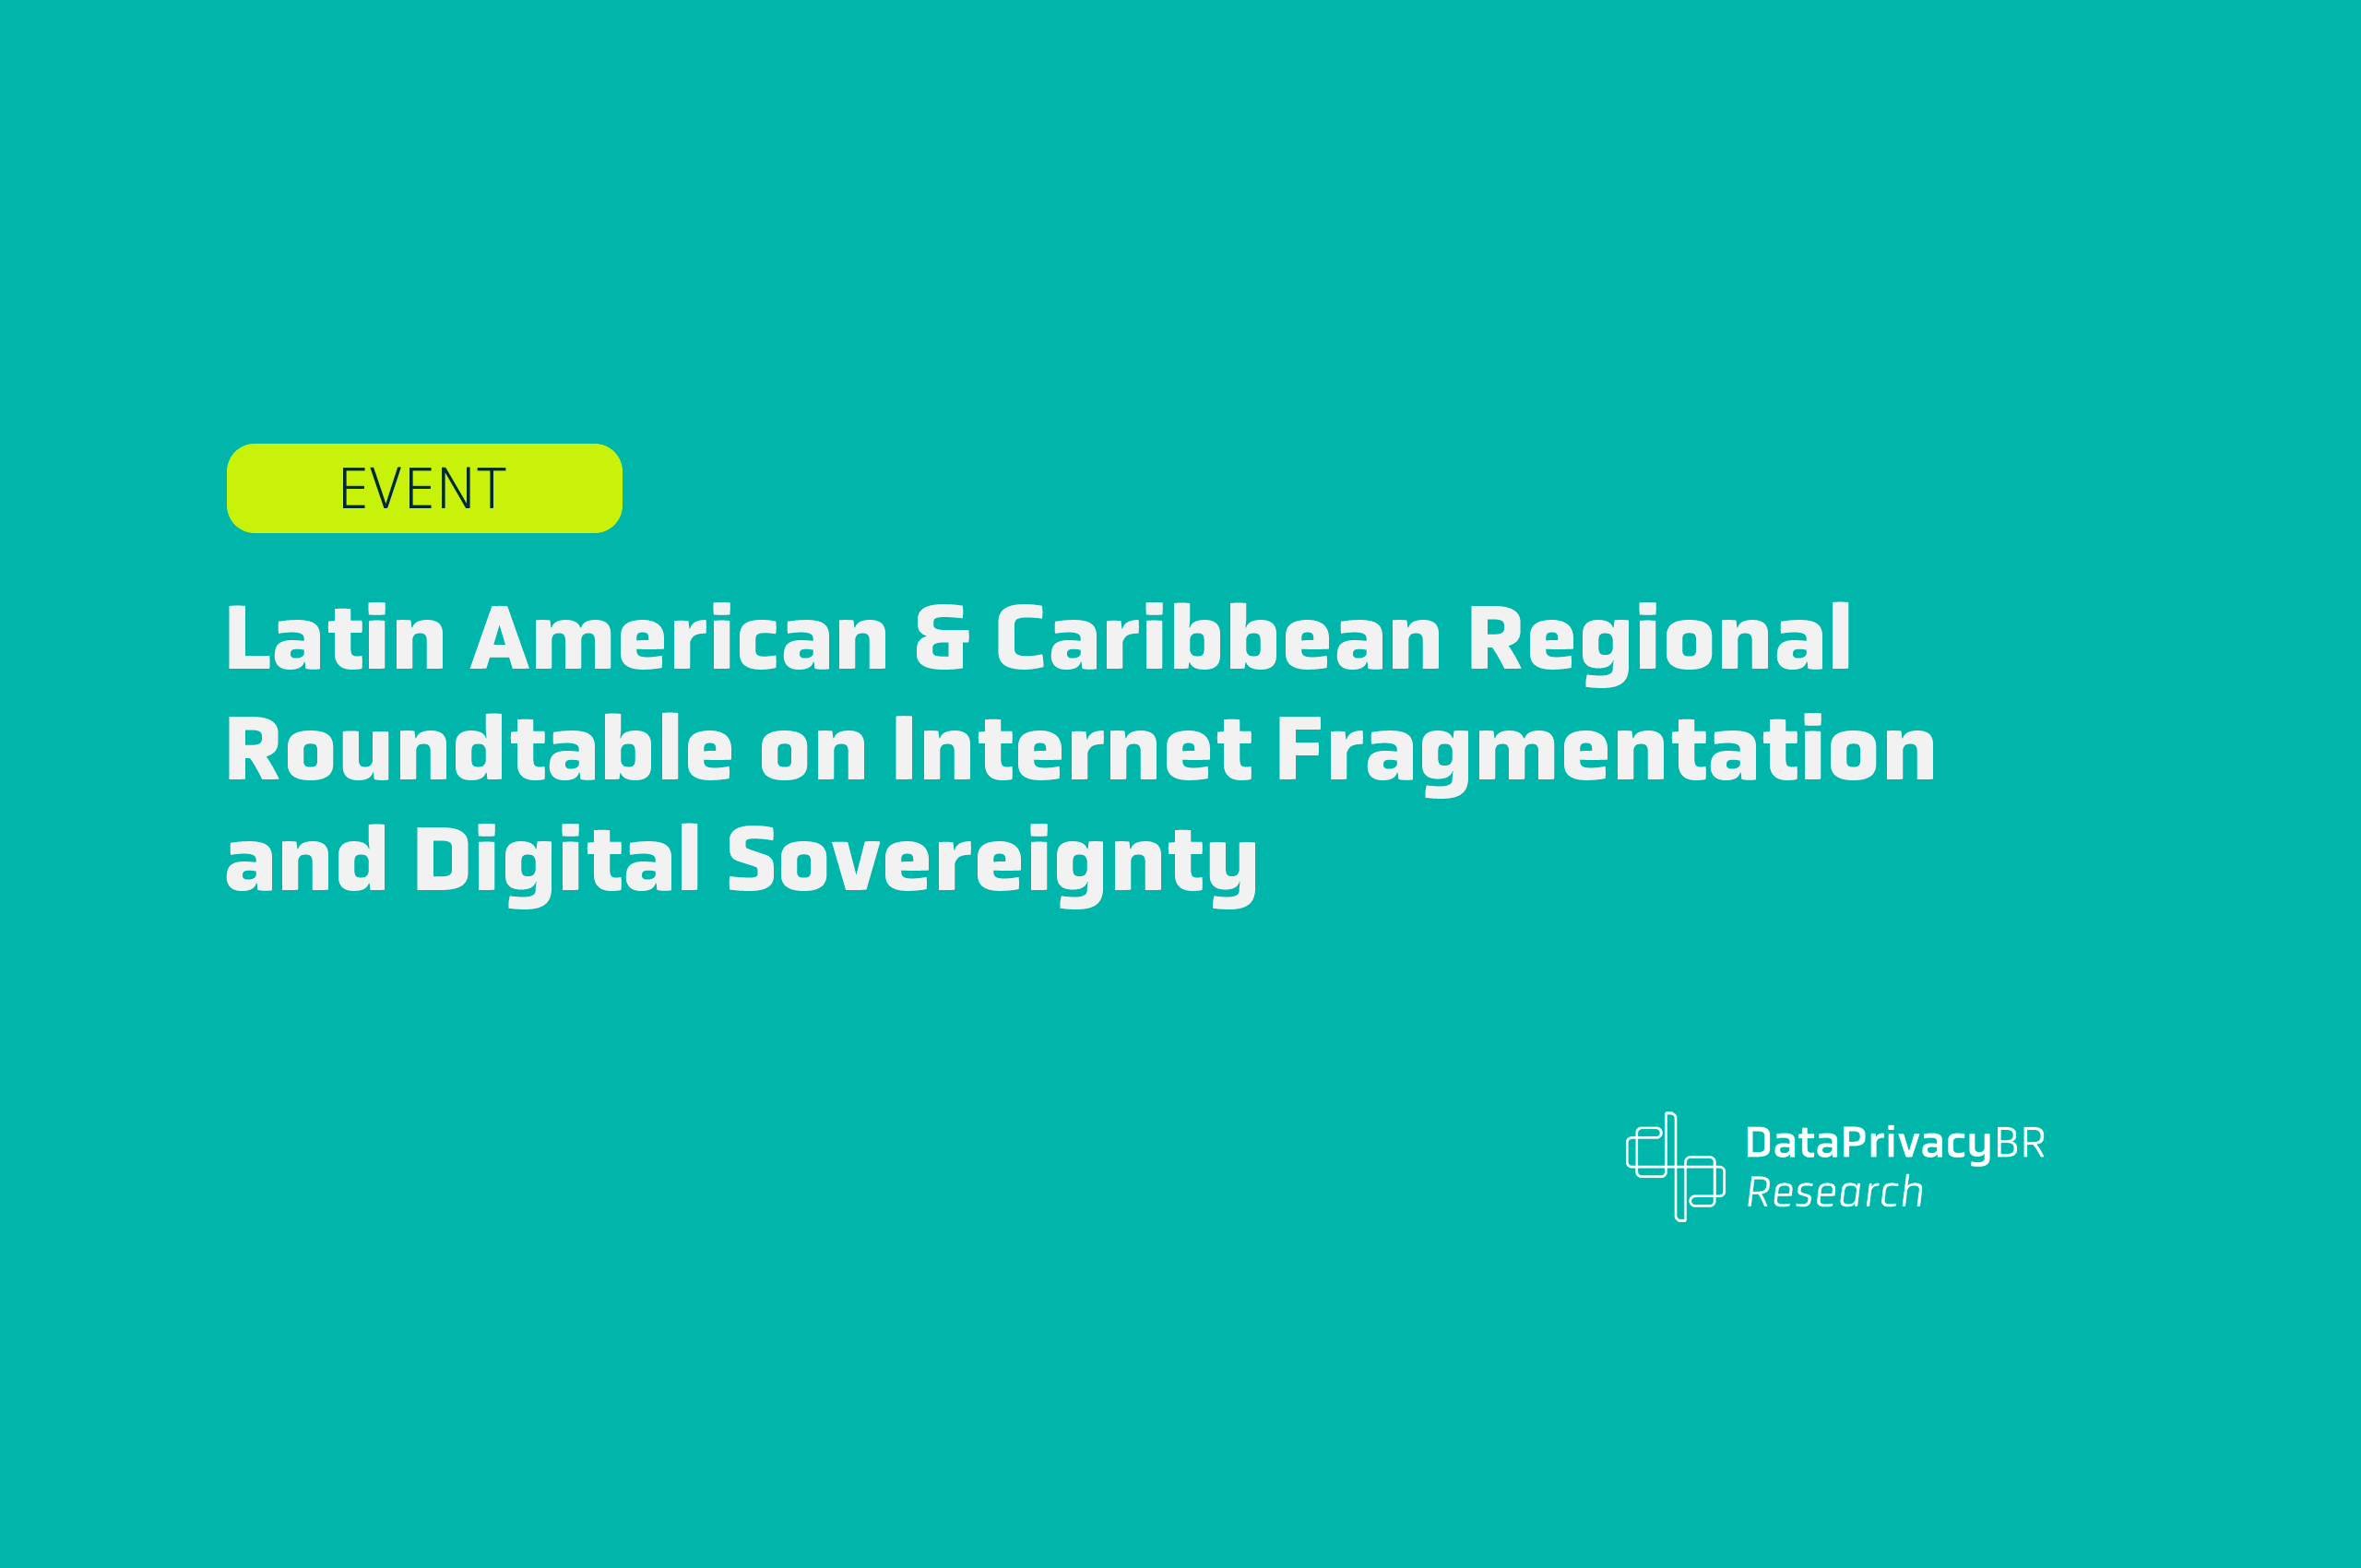 Latin American & Caribbean Regional Roundtable on Internet Fragmentation and Digital Sovereignty